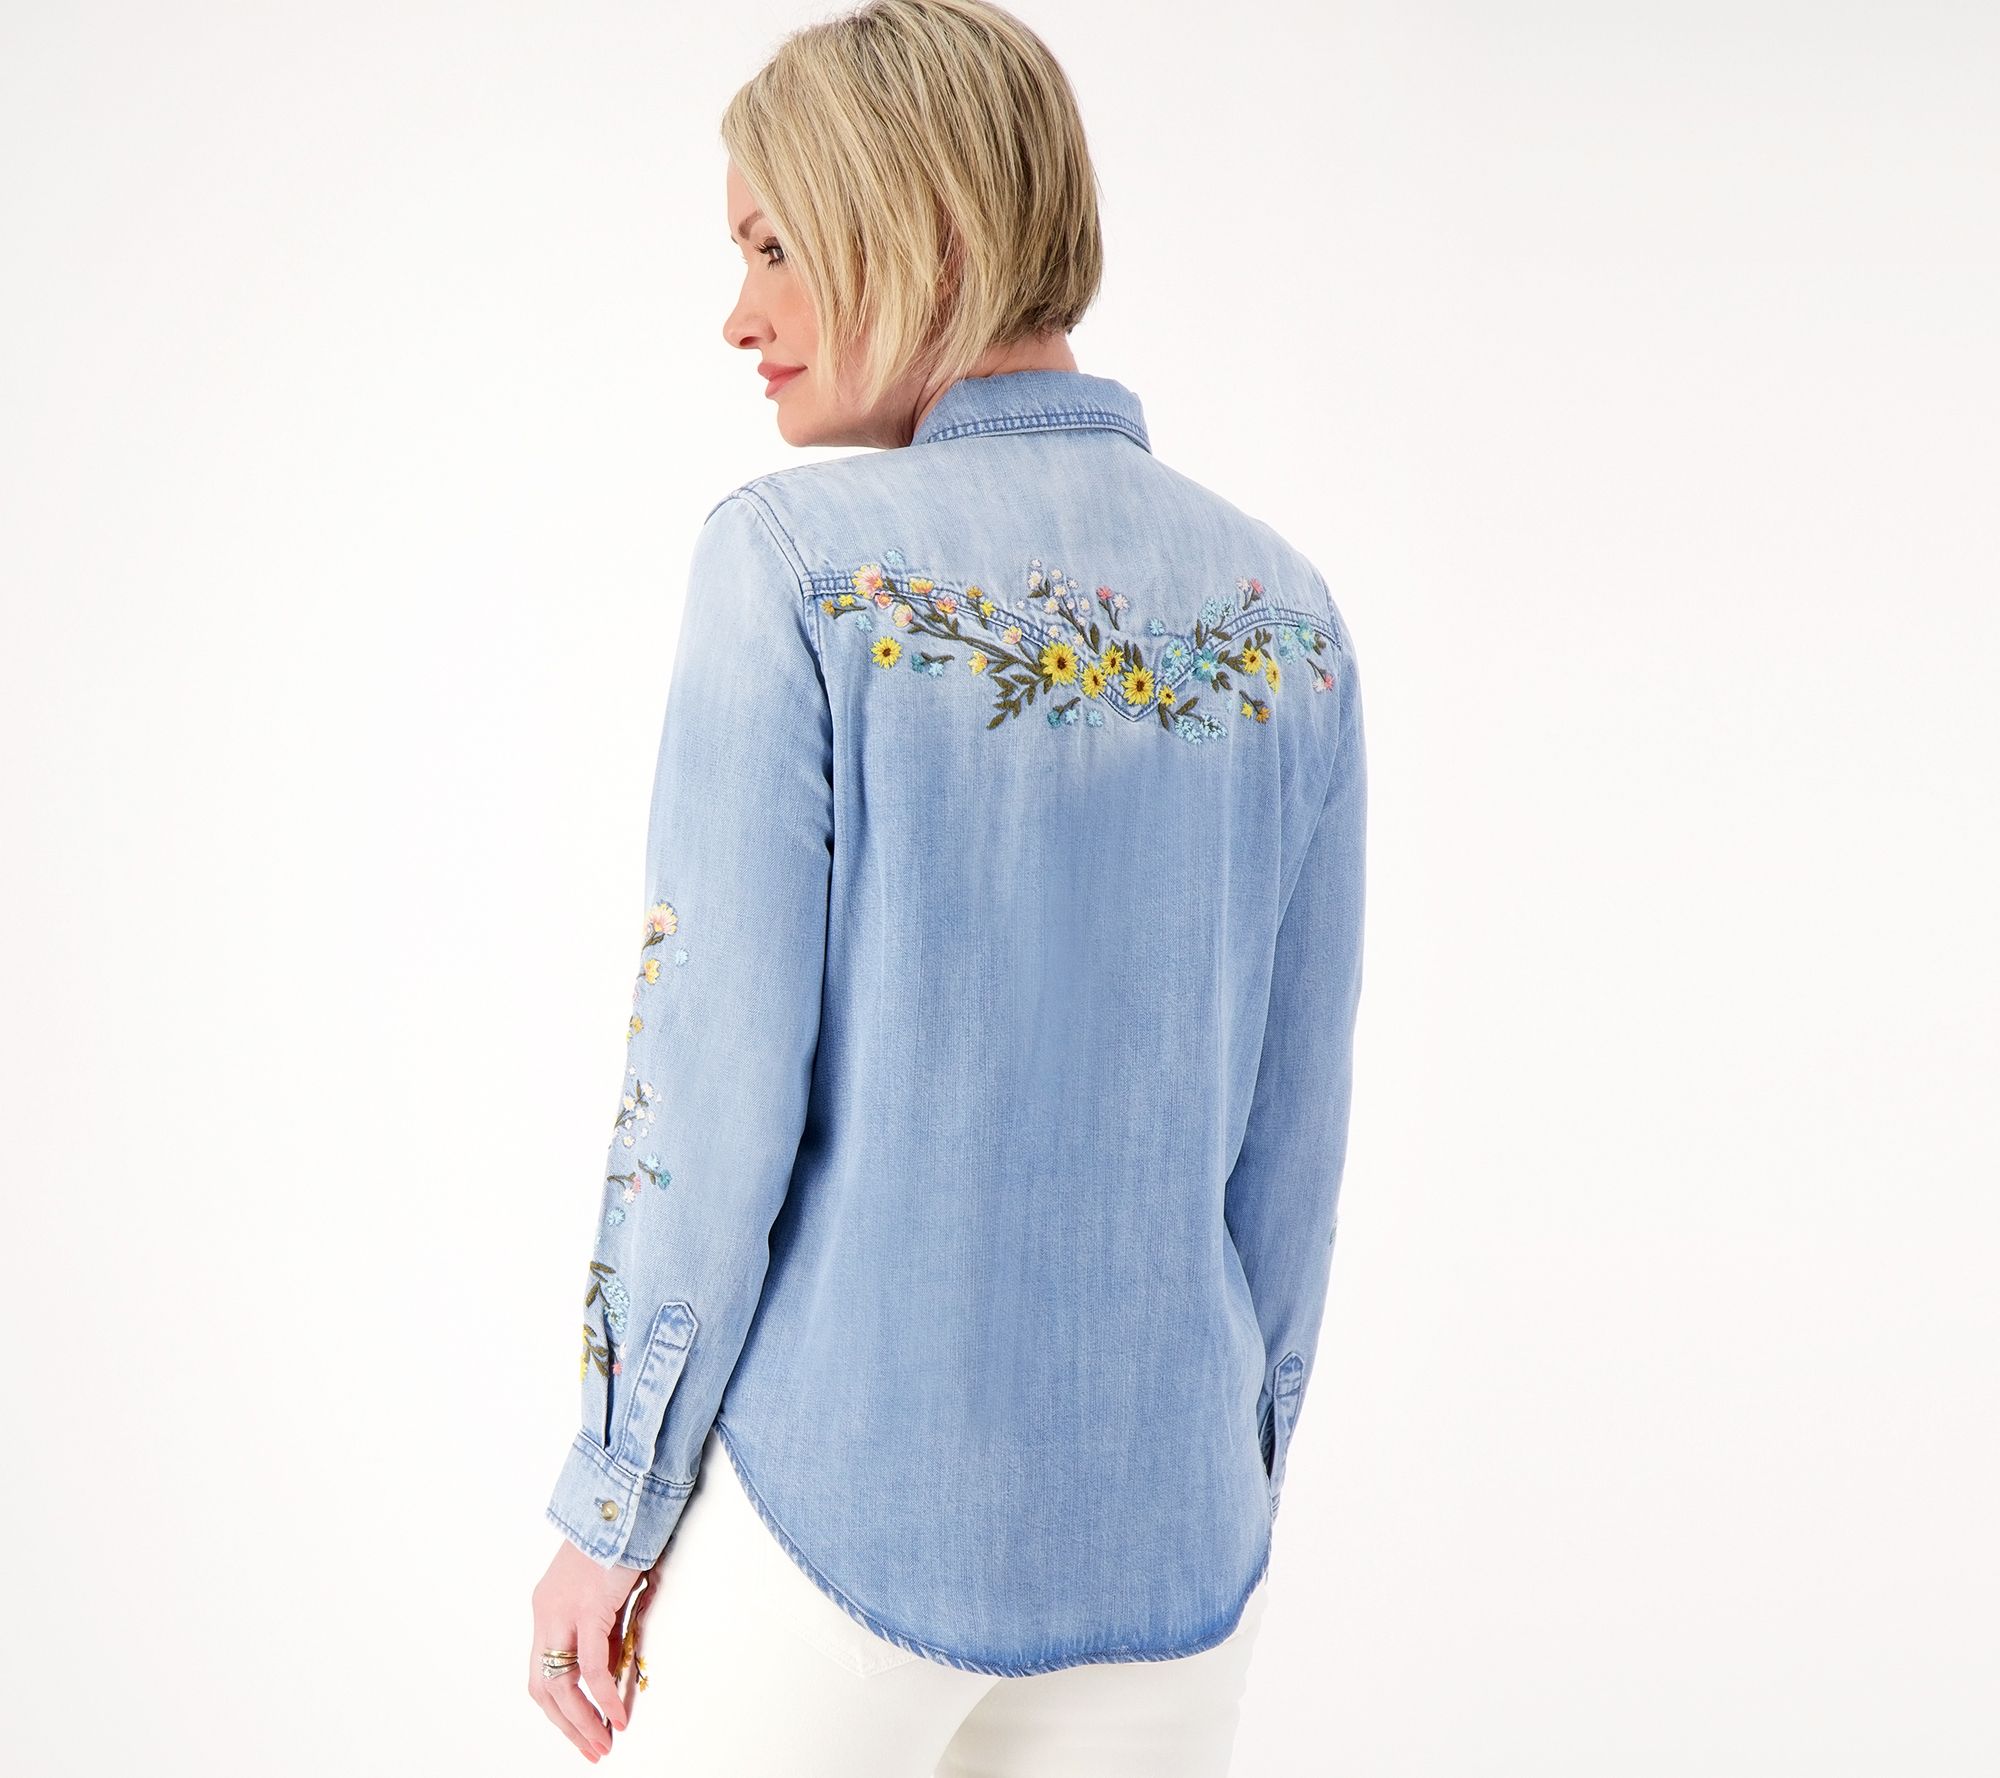 Driftwood Jeans Lana Embroidered Denim Button Front Shirt - QVC.com